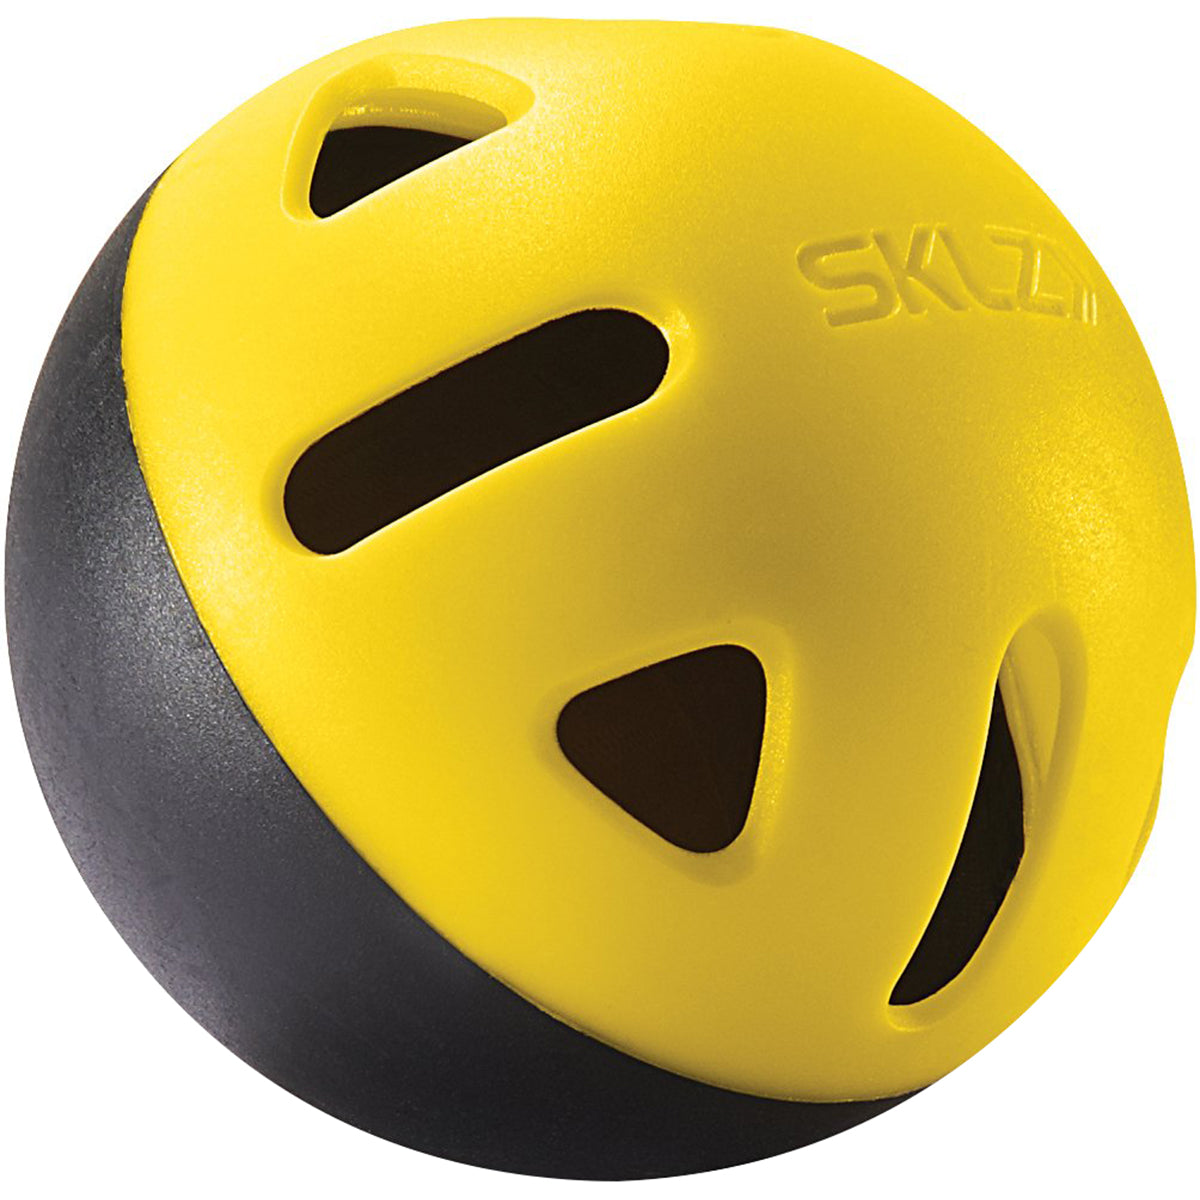 SKLZ Impact Practice Baseballs - Black/Yellow SKLZ